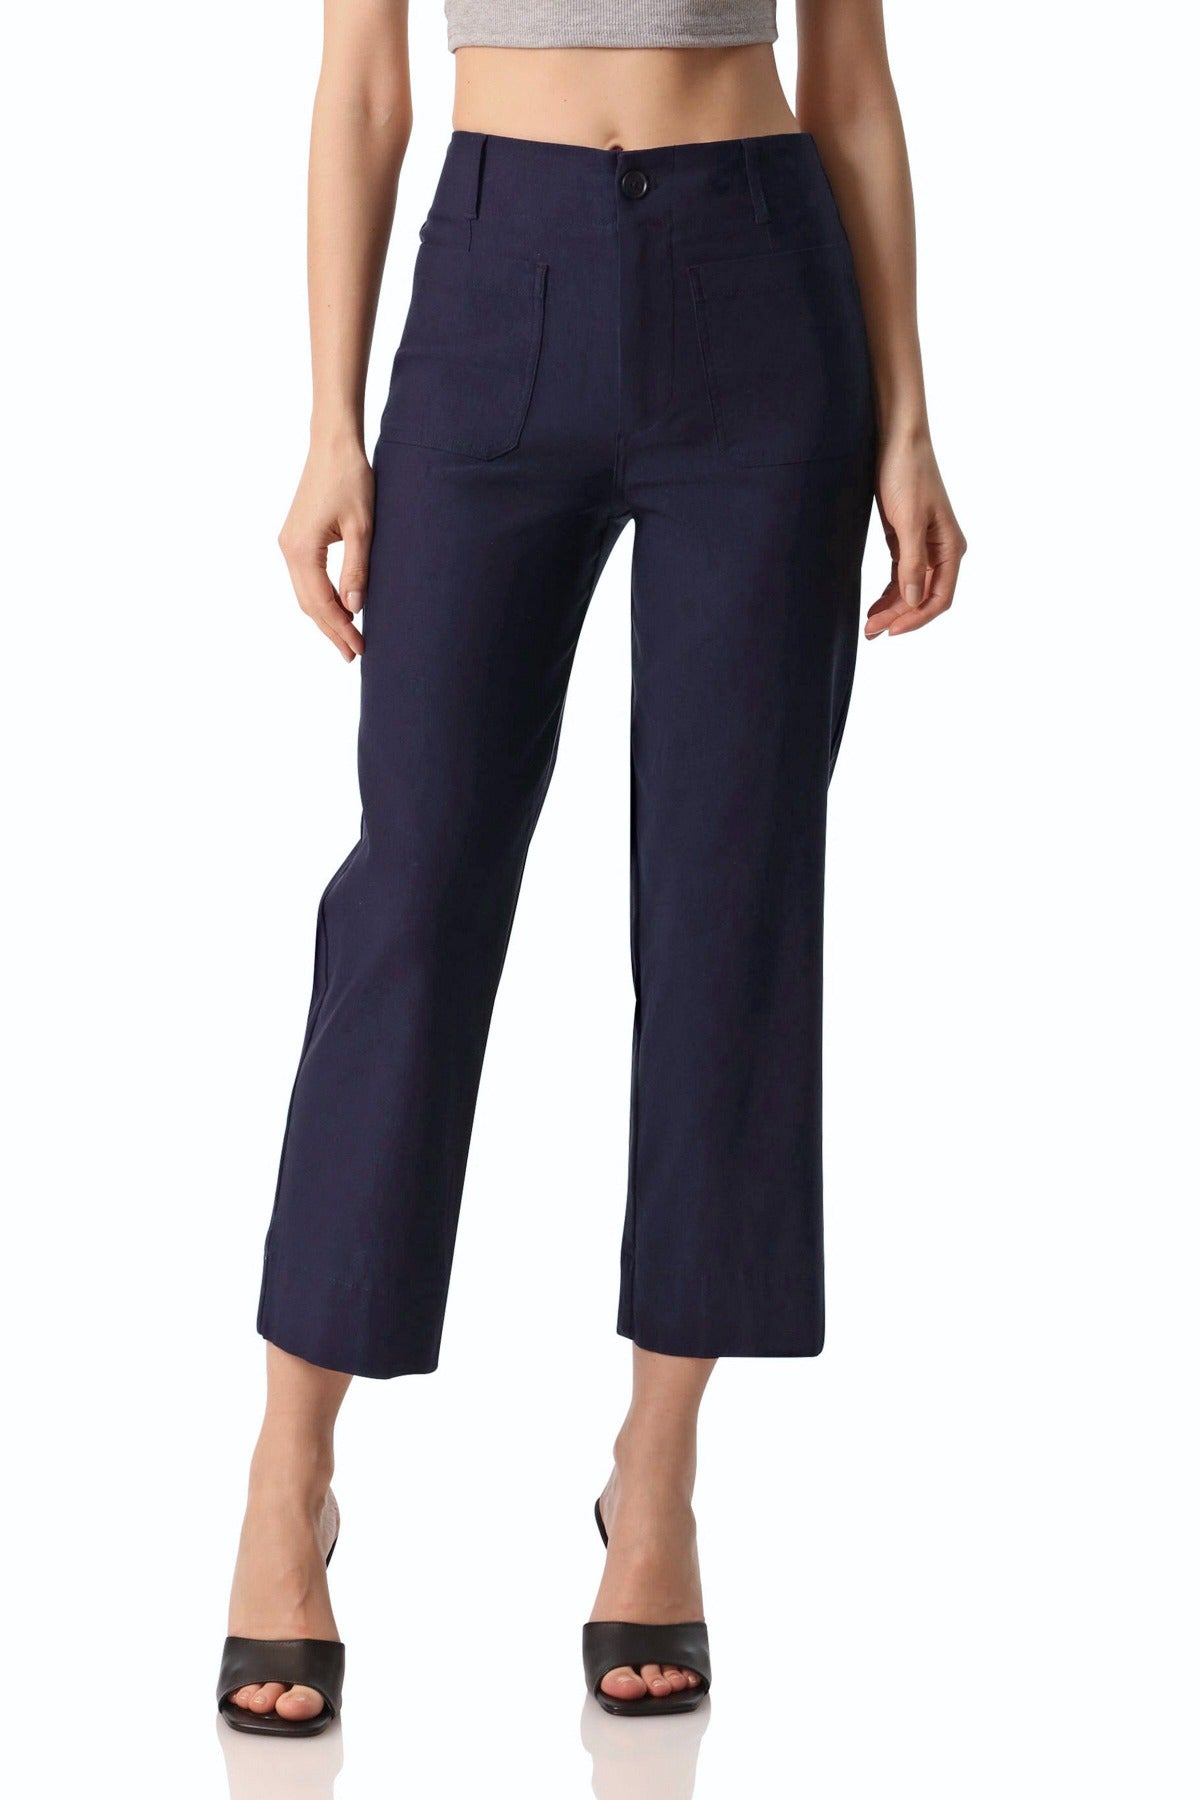 Patch Pocket Wide Leg Pants Rayon Blend Navy Blue - Women's Figure Flattering Fashion Bottoms Designer Bottoms for Women